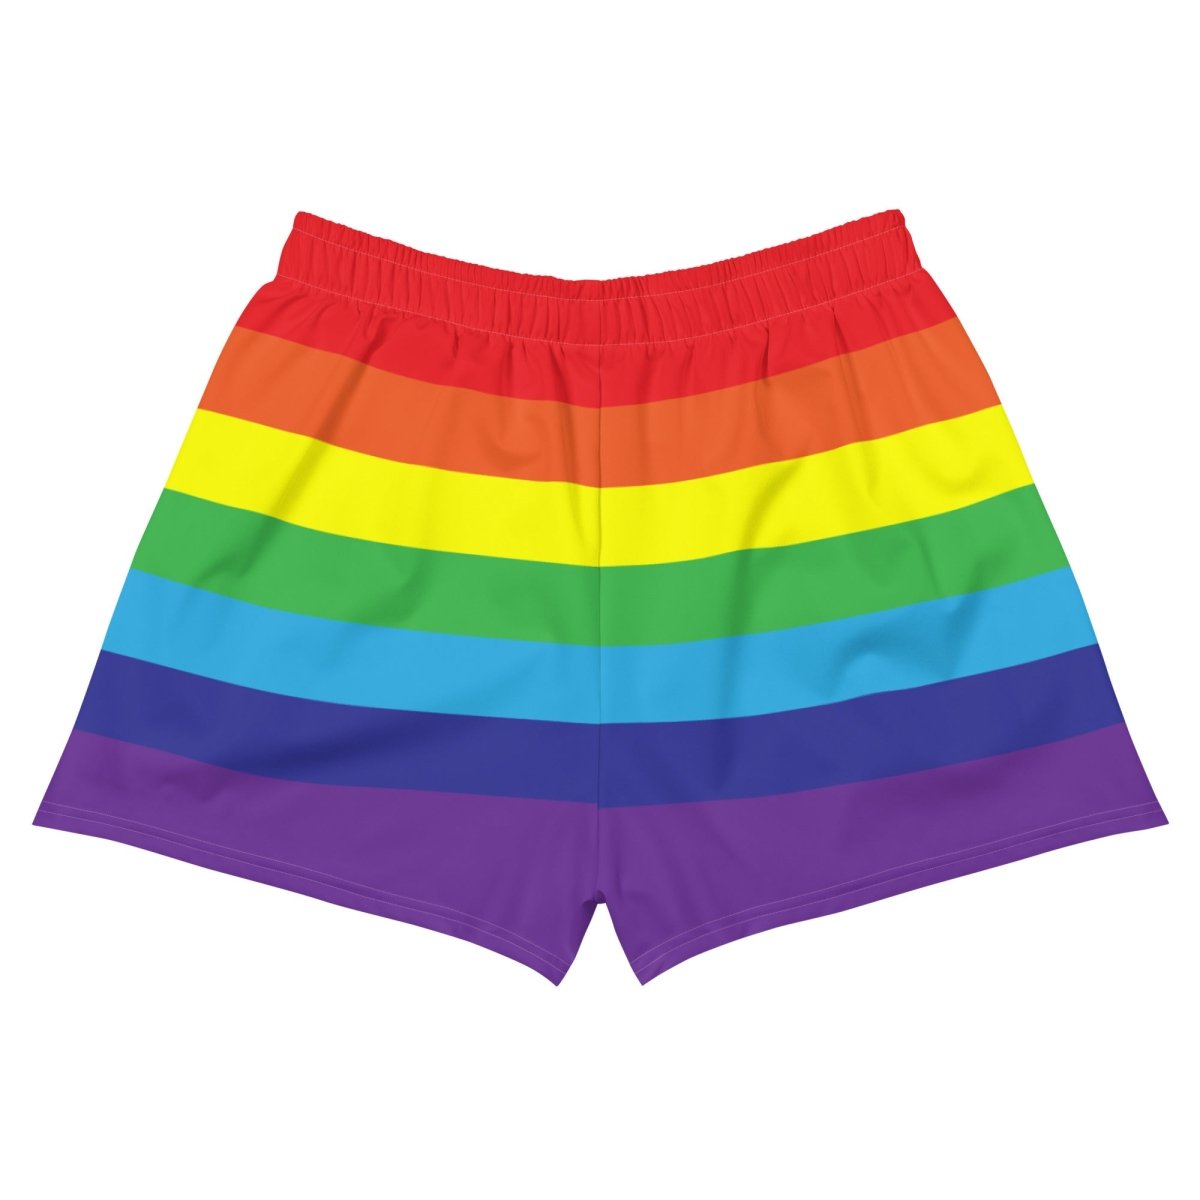 Rainbow Flag Shorts - On Trend Shirts